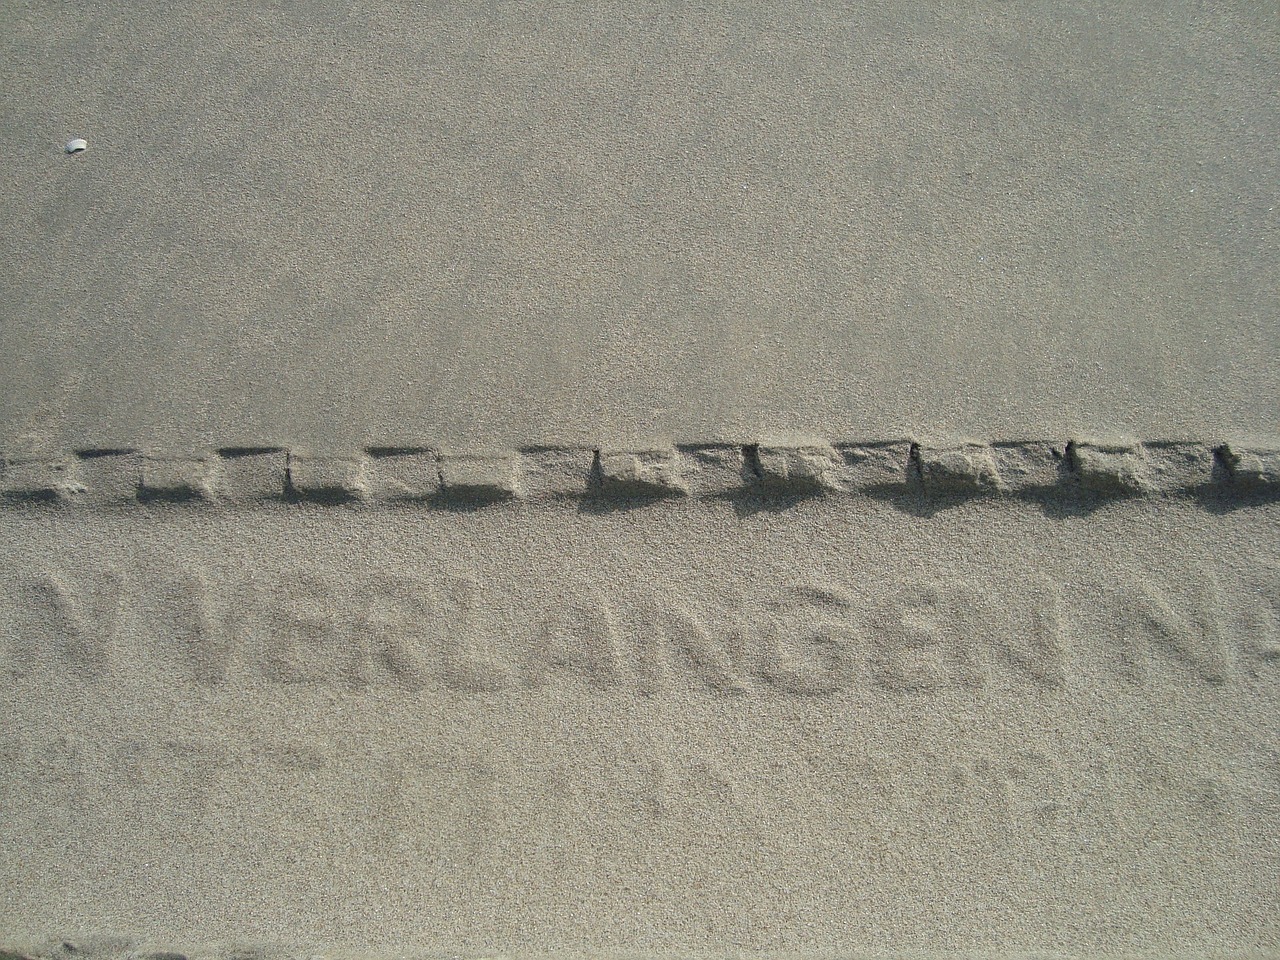 text sand vlieland free photo